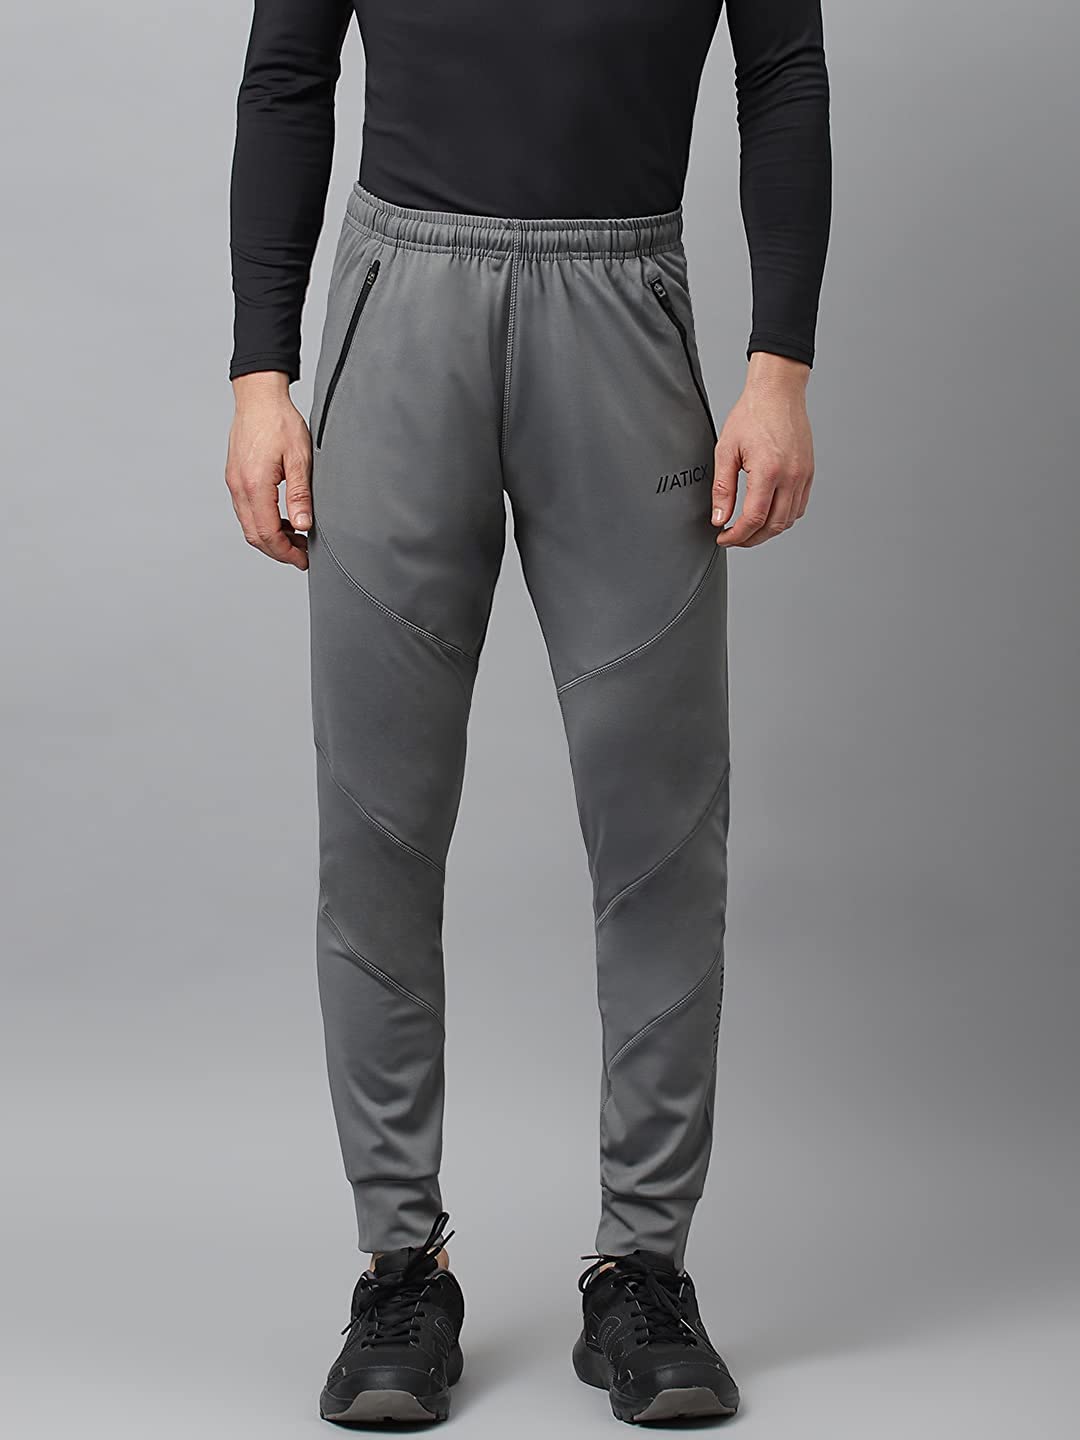 Men's Slim Fit Polyester Joggers (Steel Grey)